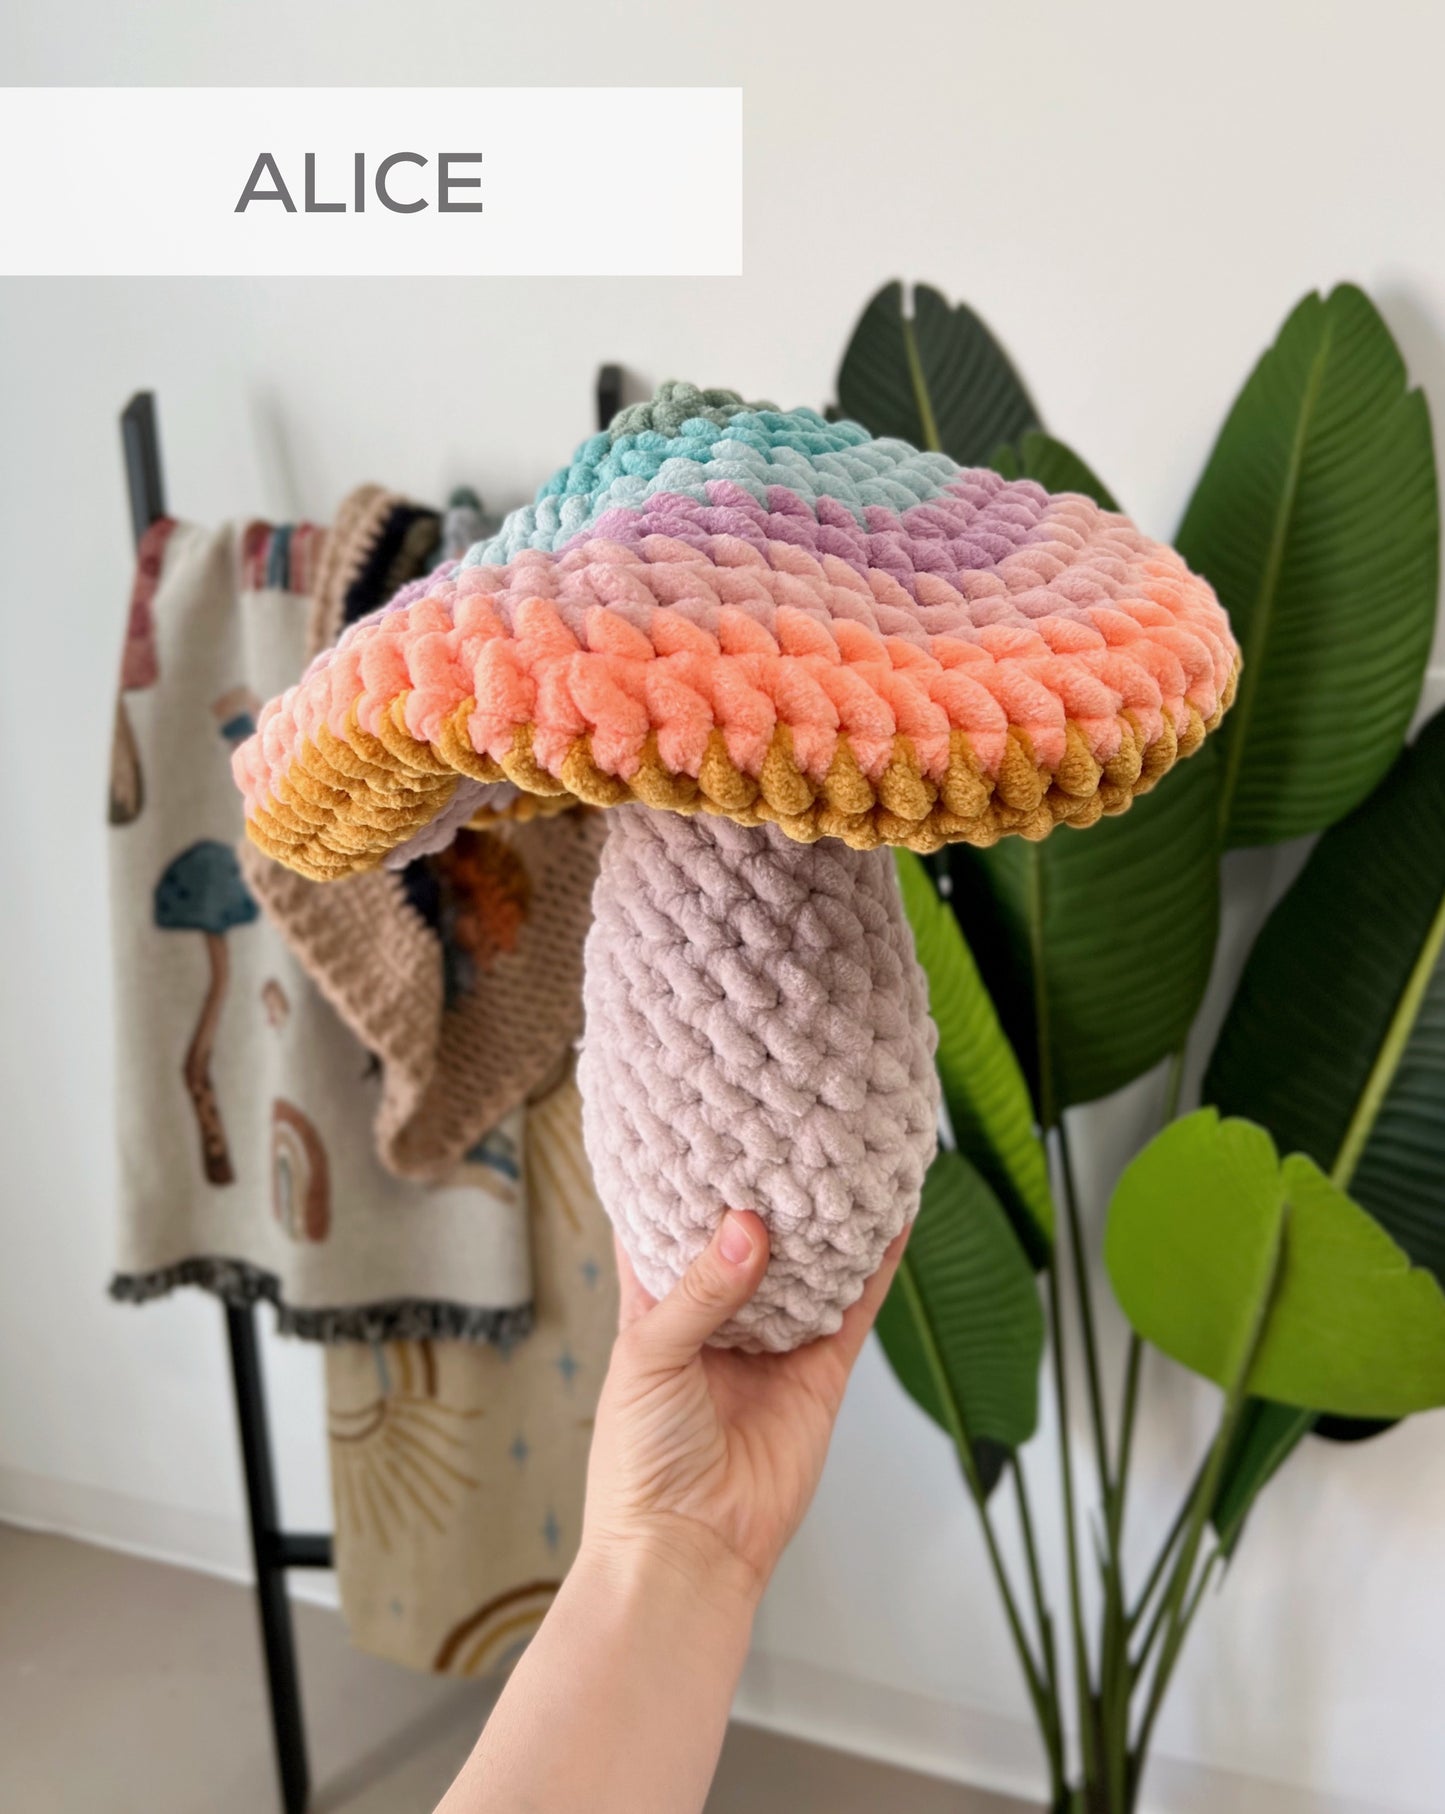 Wonderland Mushroom Pillow - KIT – Mama Made Minis